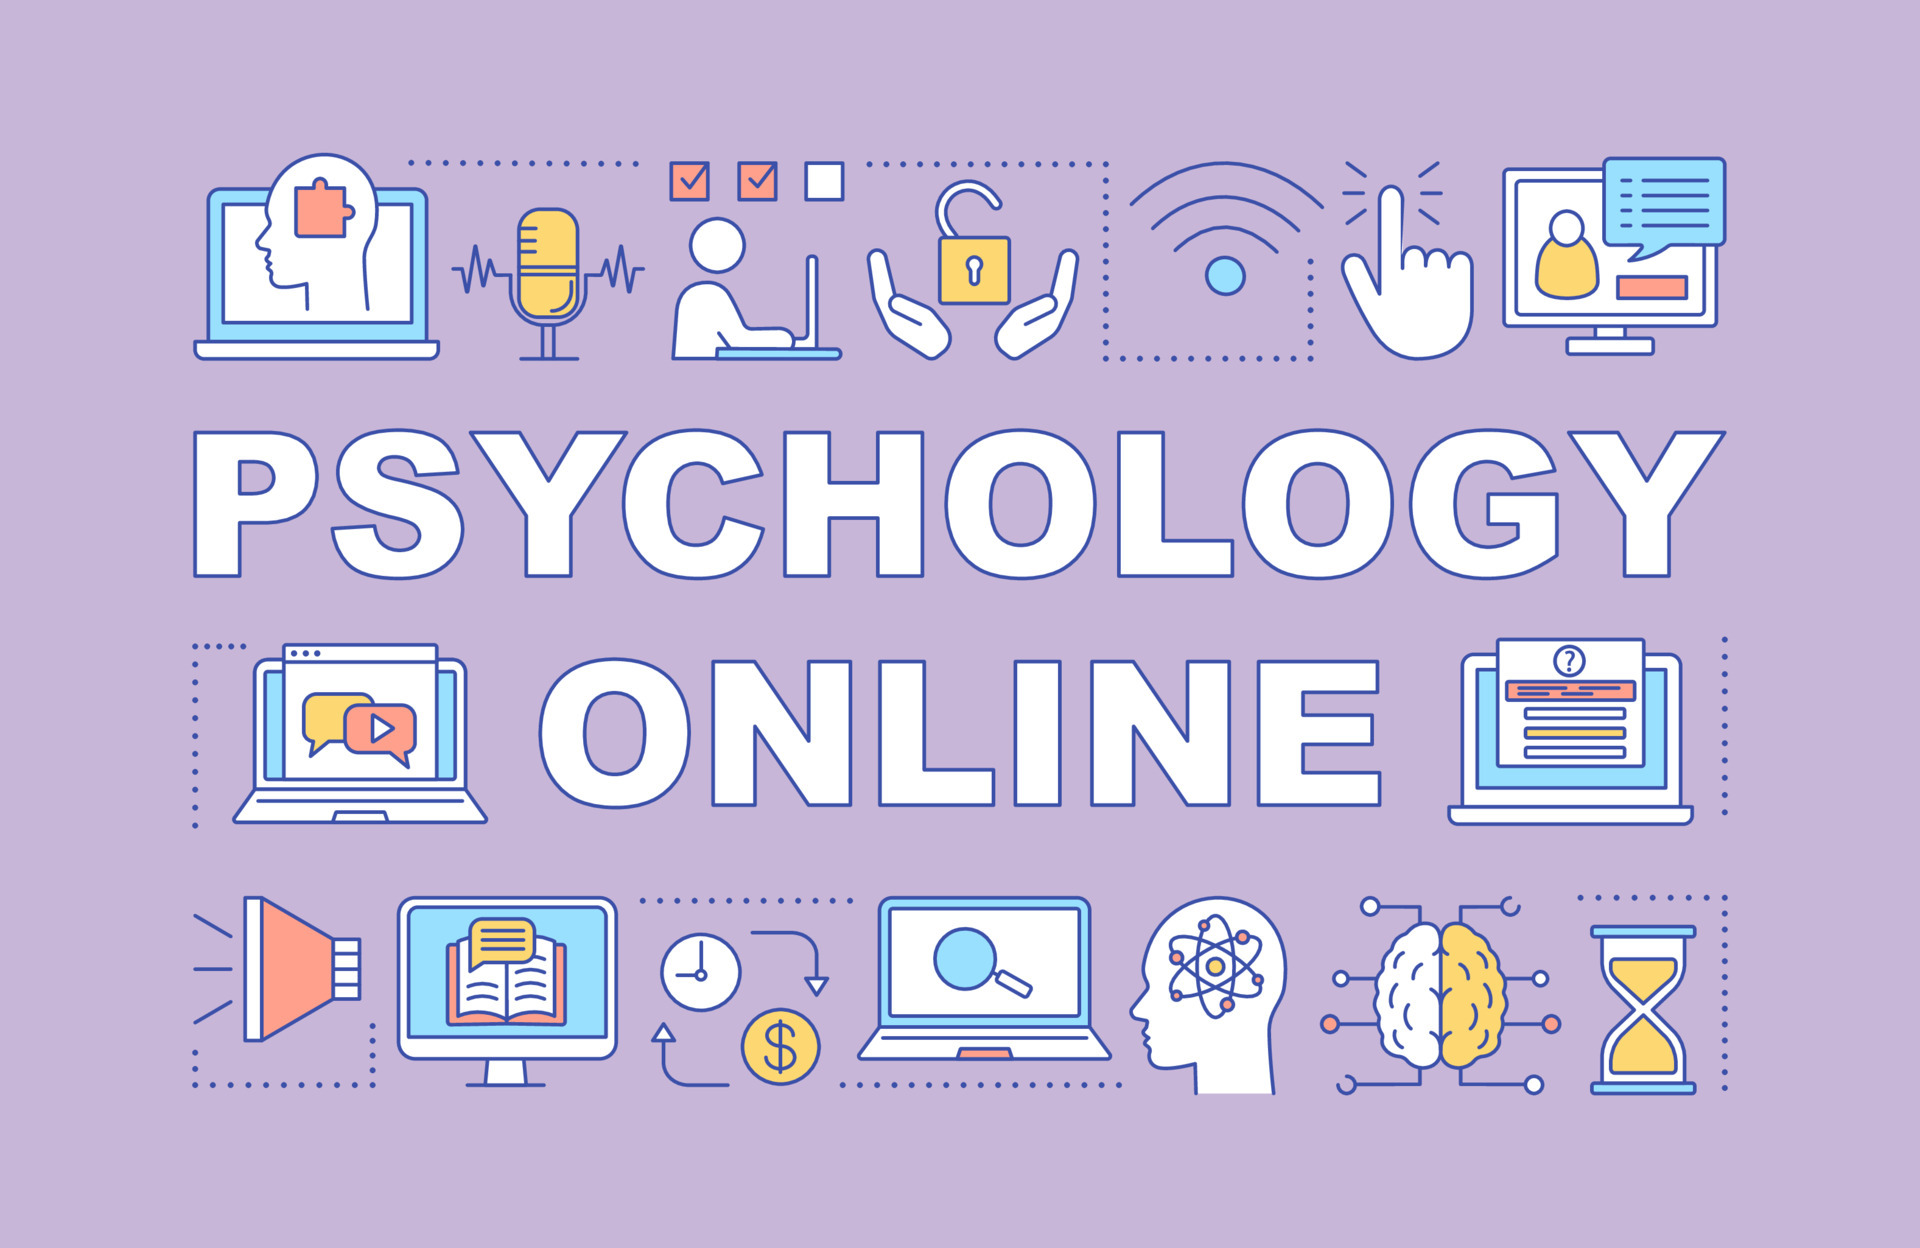 Mental health online chat